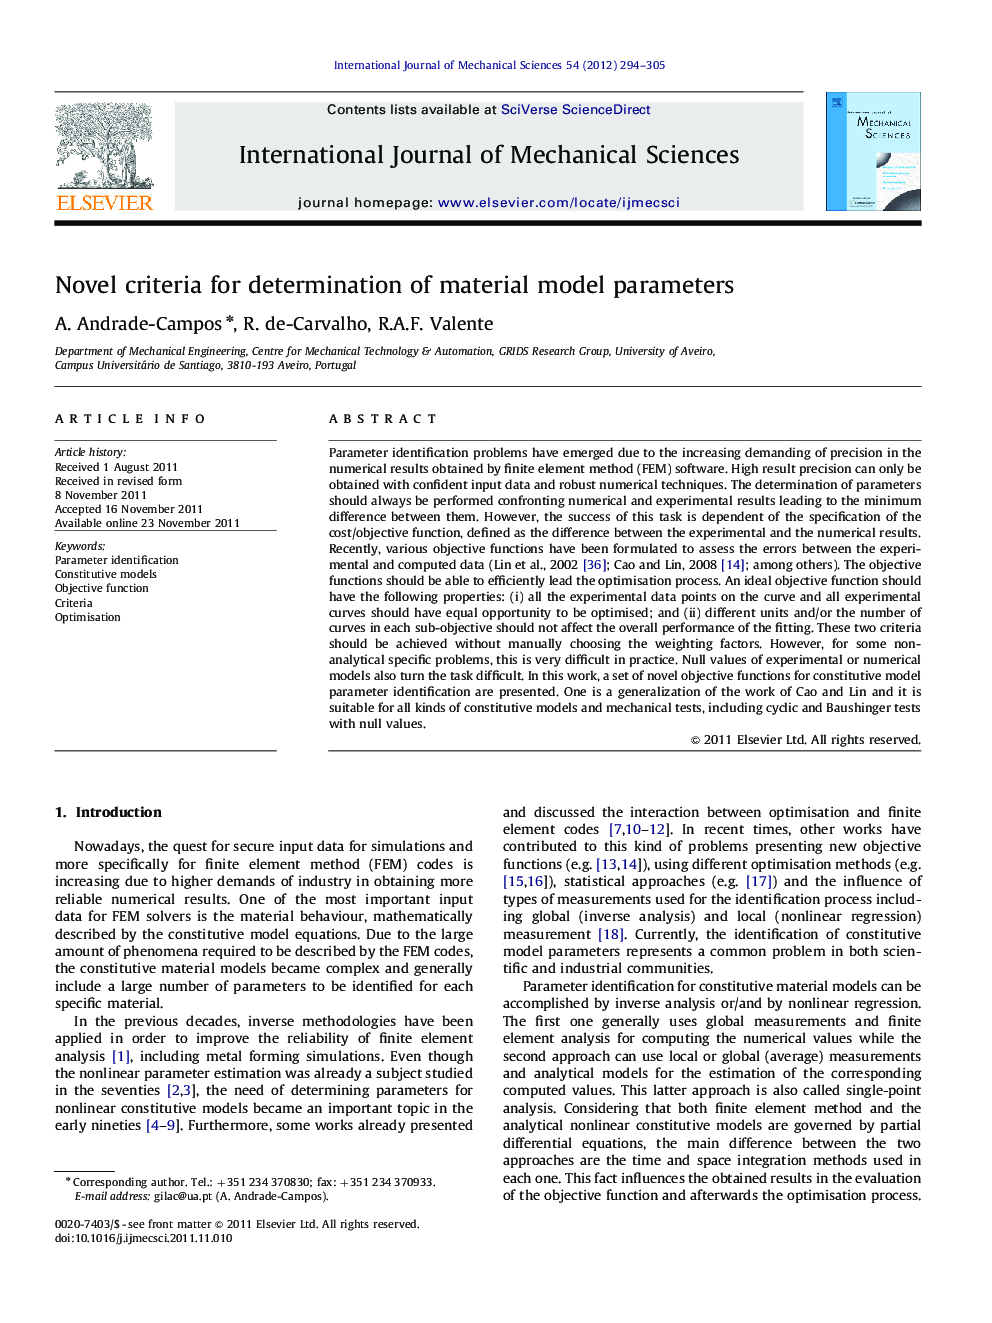 Novel criteria for determination of material model parameters